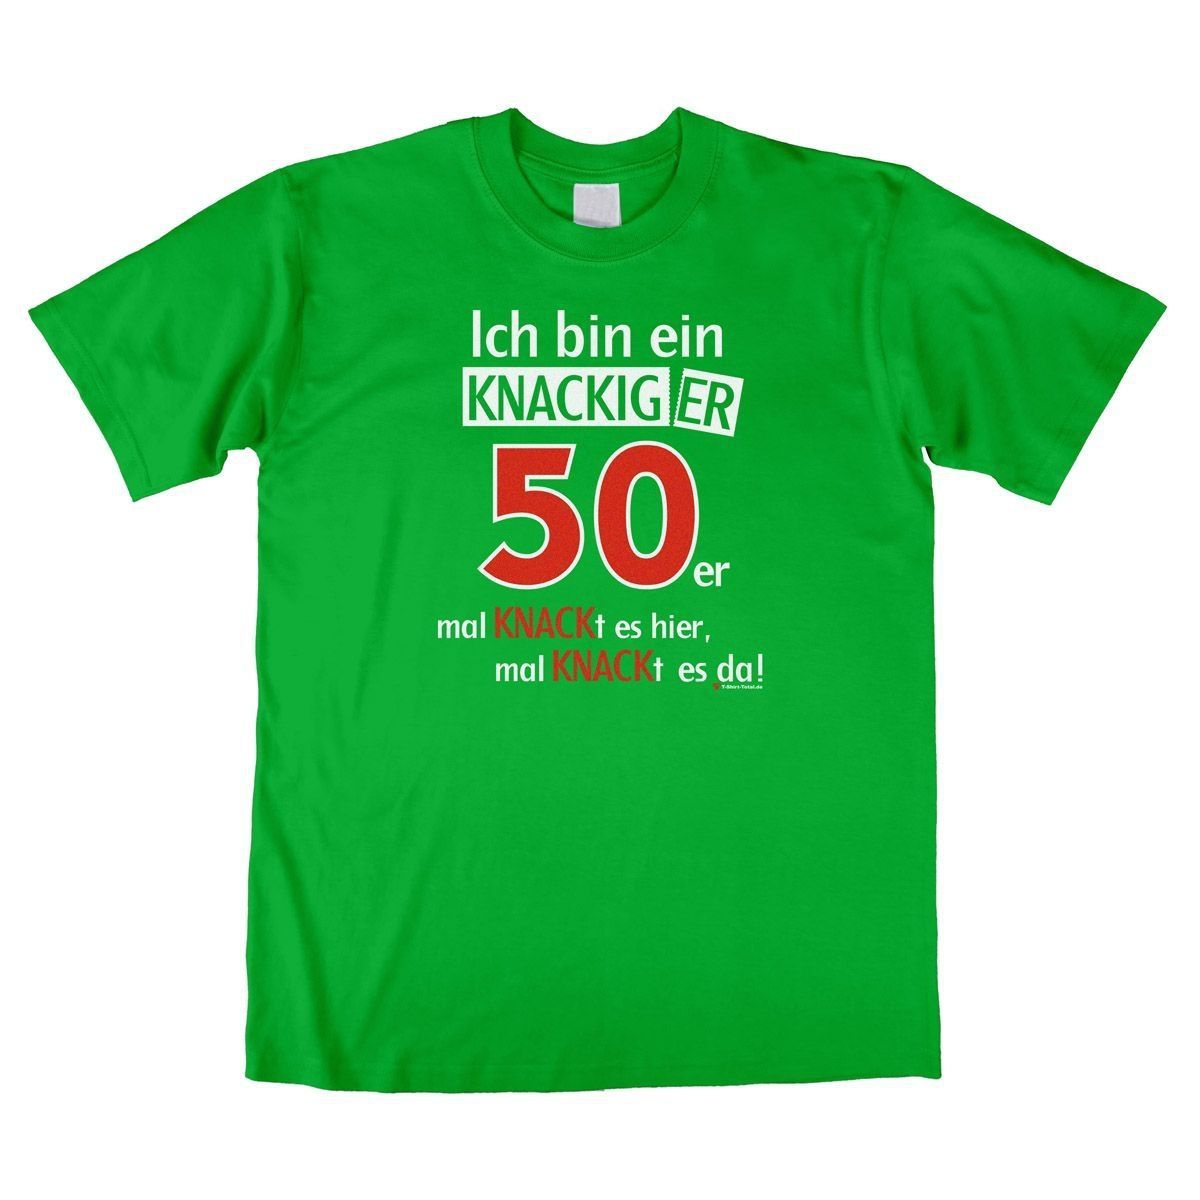 Knackiger 50er Unisex T-Shirt grün Extra Large